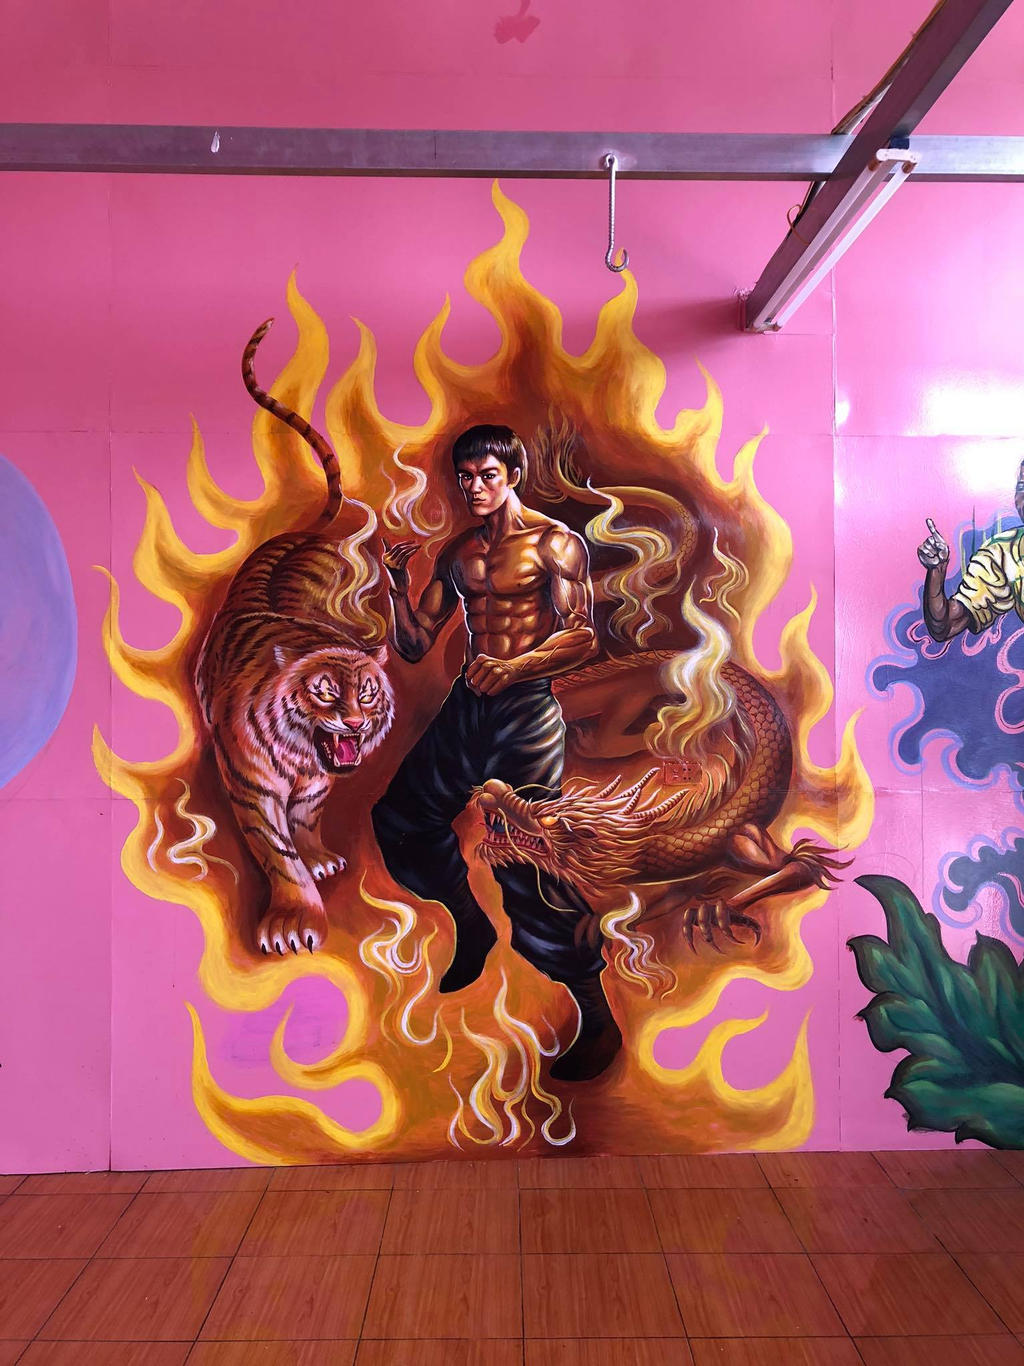 Mural - Bruce Lee n Dragon vs Tiger by Doppelstalker on DeviantArt